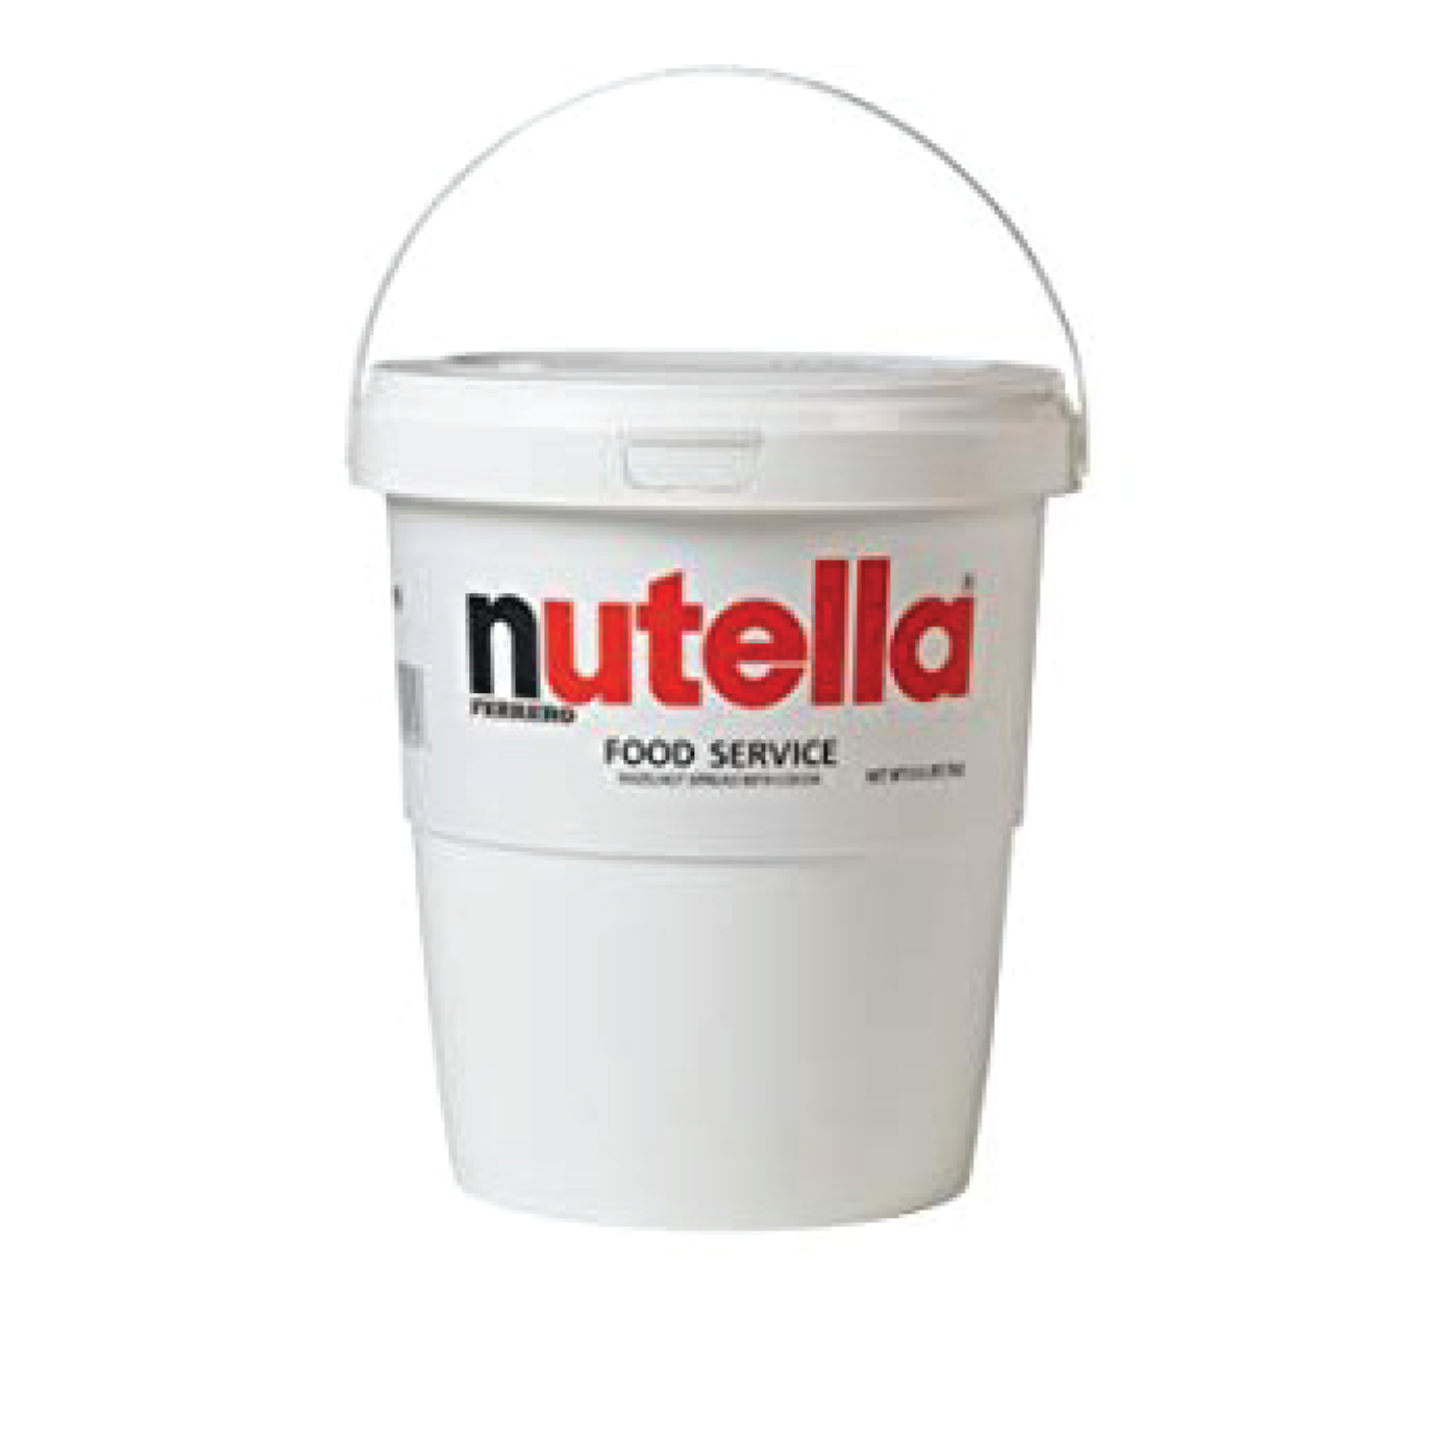 Nutella Chocolate Hazelnut Spread, 6.6 Pound Tub (Pack Of 2